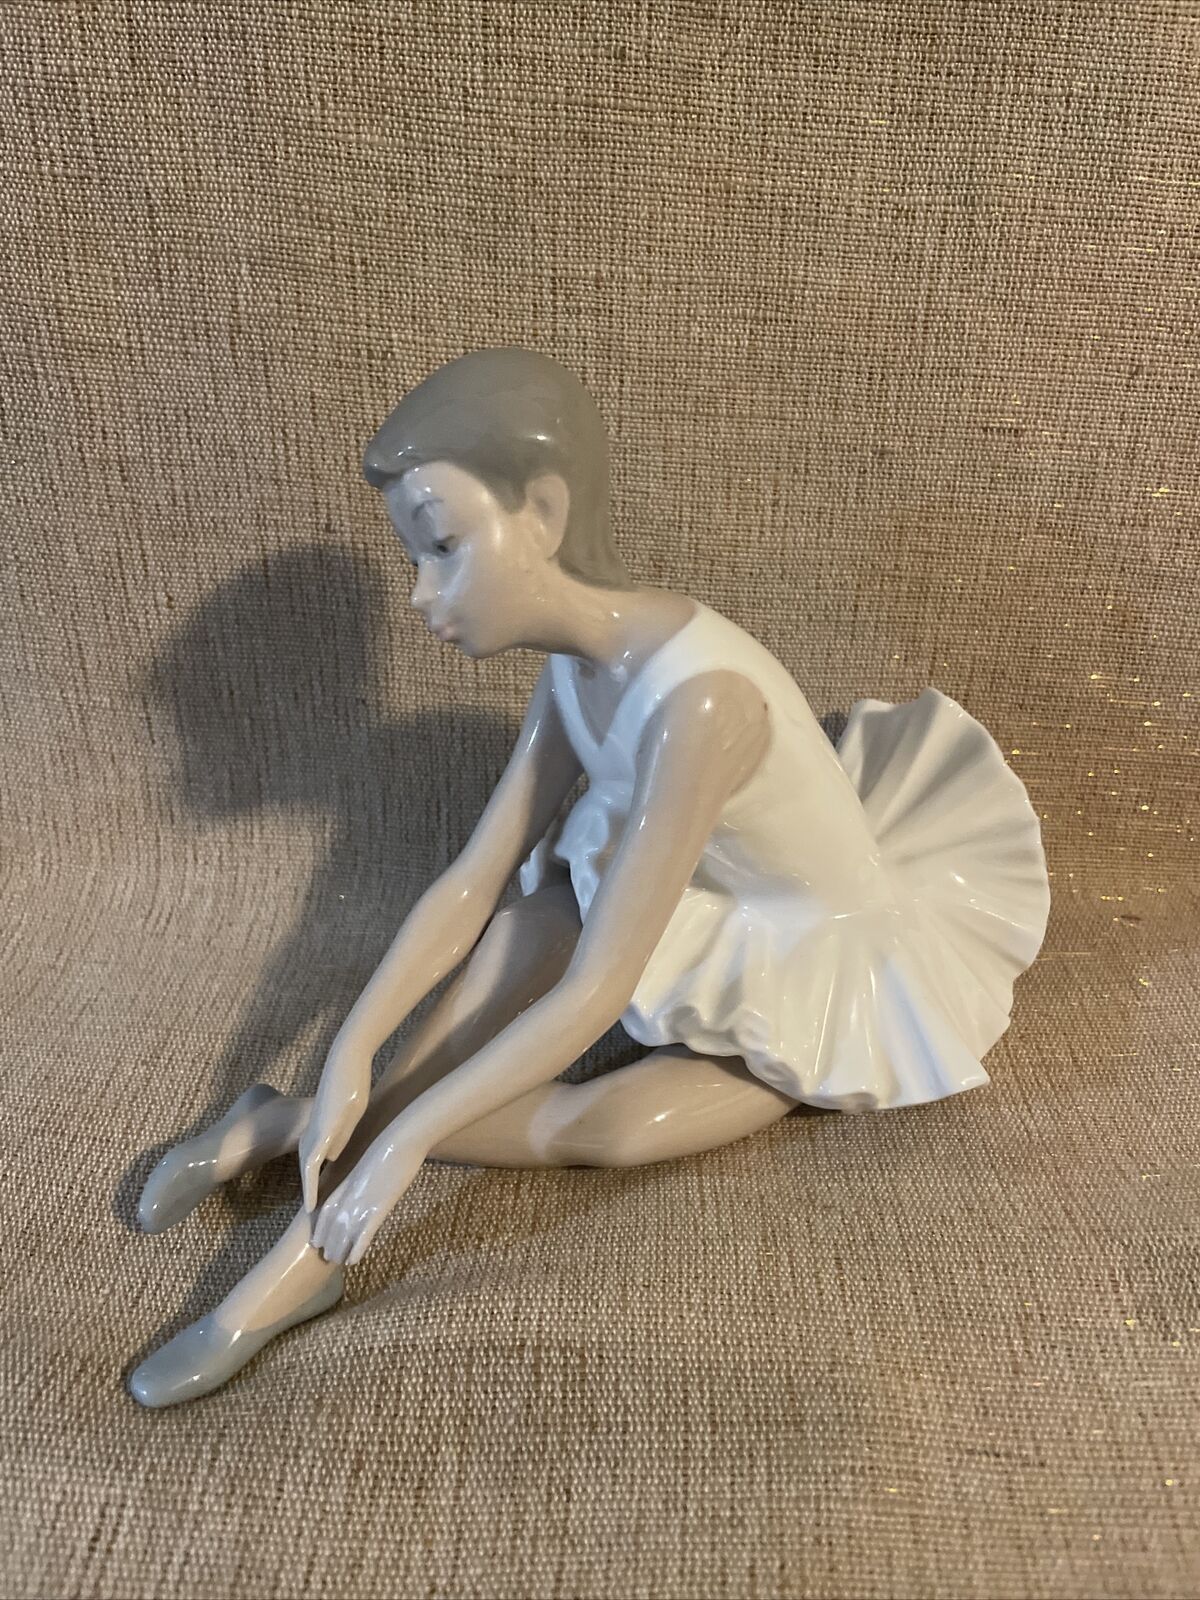  Vtg Porcelain Ballerina Figurine NAO by Lladro Spain BY VINCENTE MARTINEZ #151